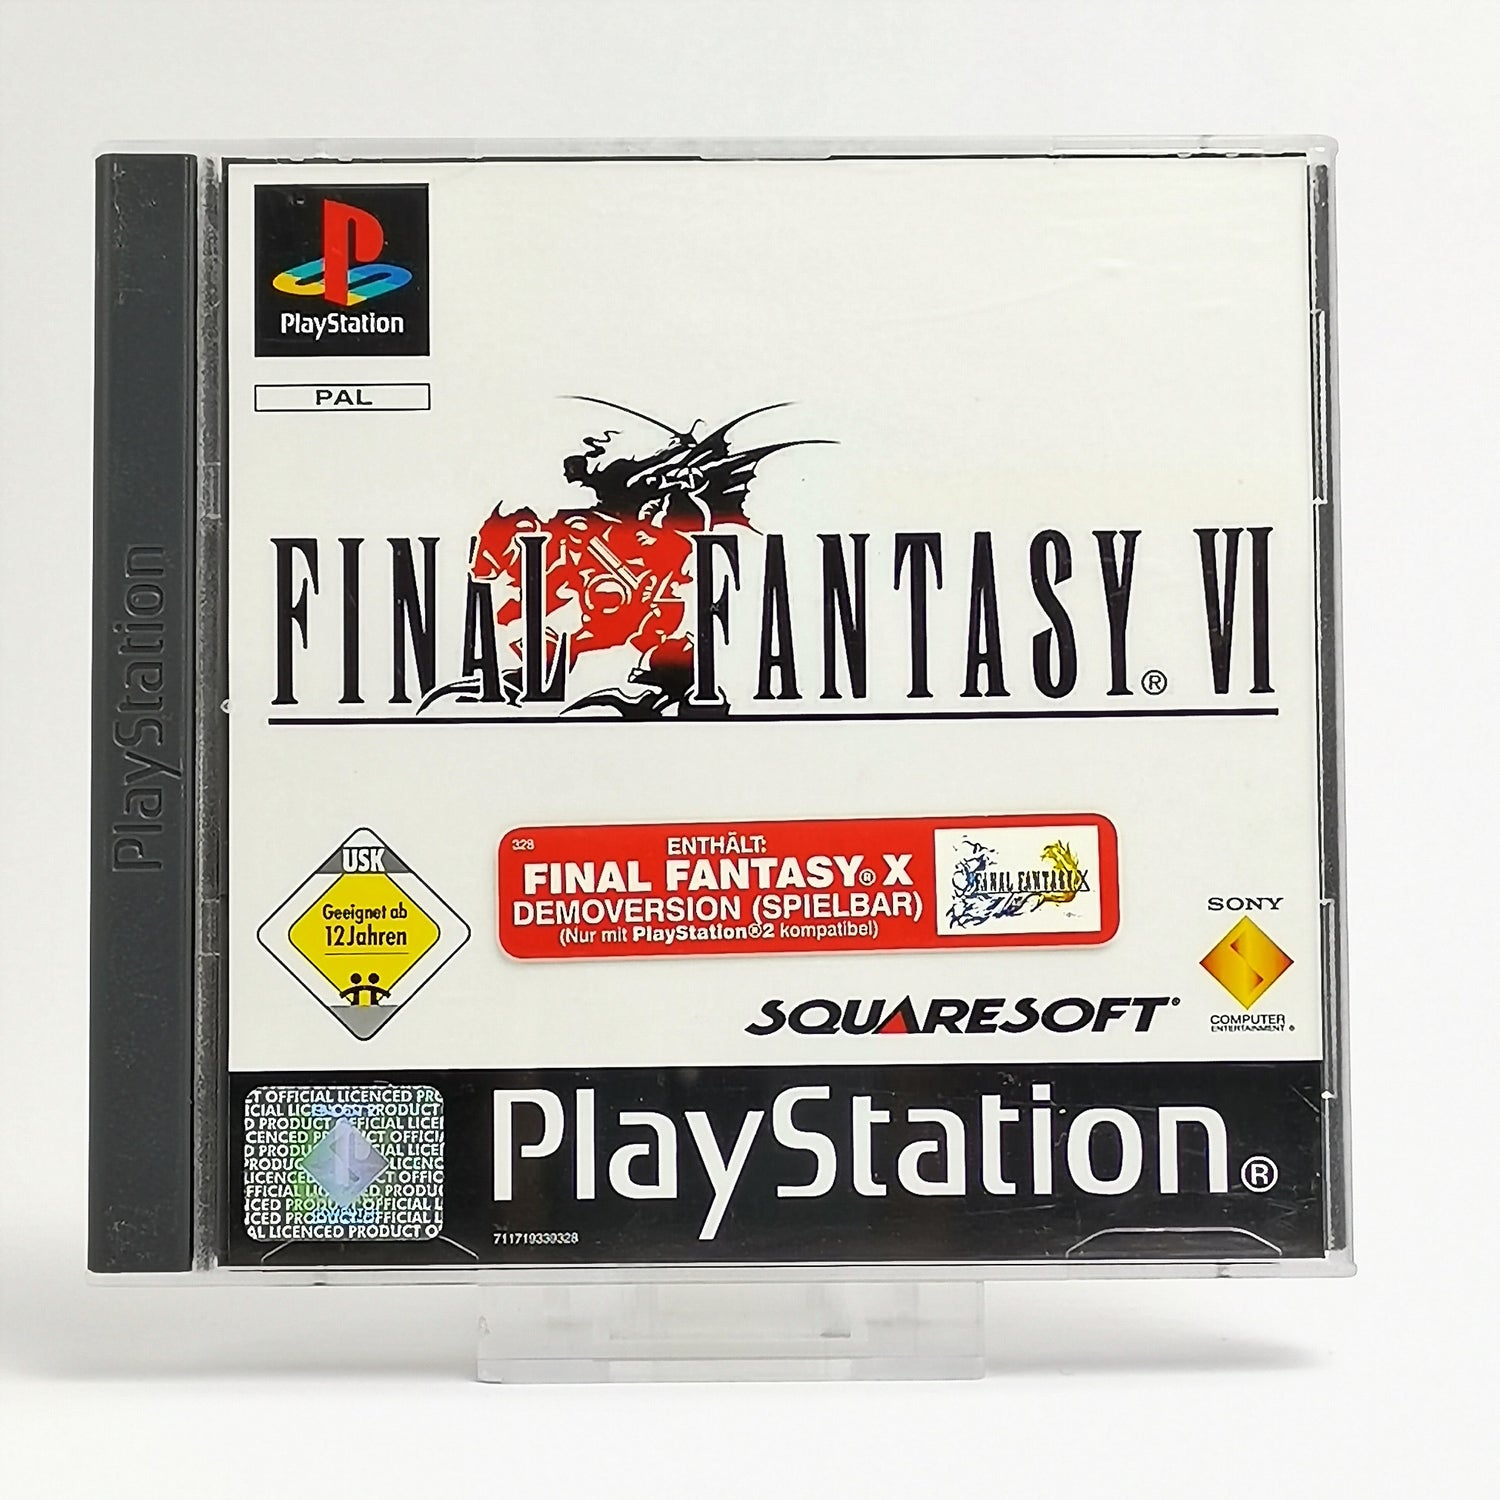 Sony Playstation 1 Game: Final Fantasy VI 6 + Demo - Original Packaging & Instructions | PS1 PAL